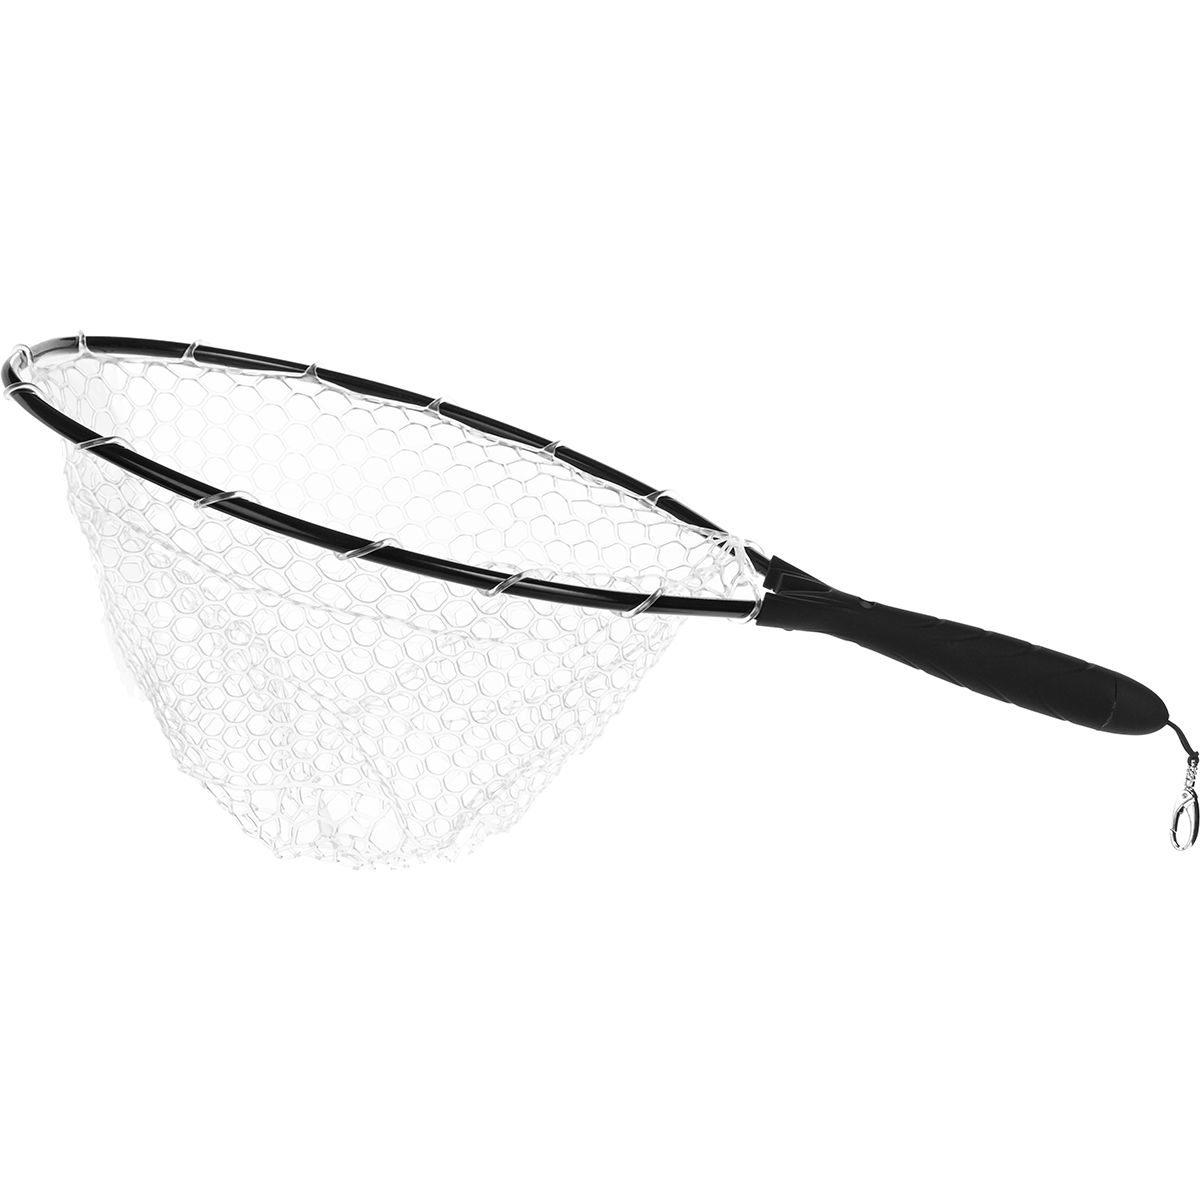 Brodin Davidson Trout Bum Net - Fly Fishing